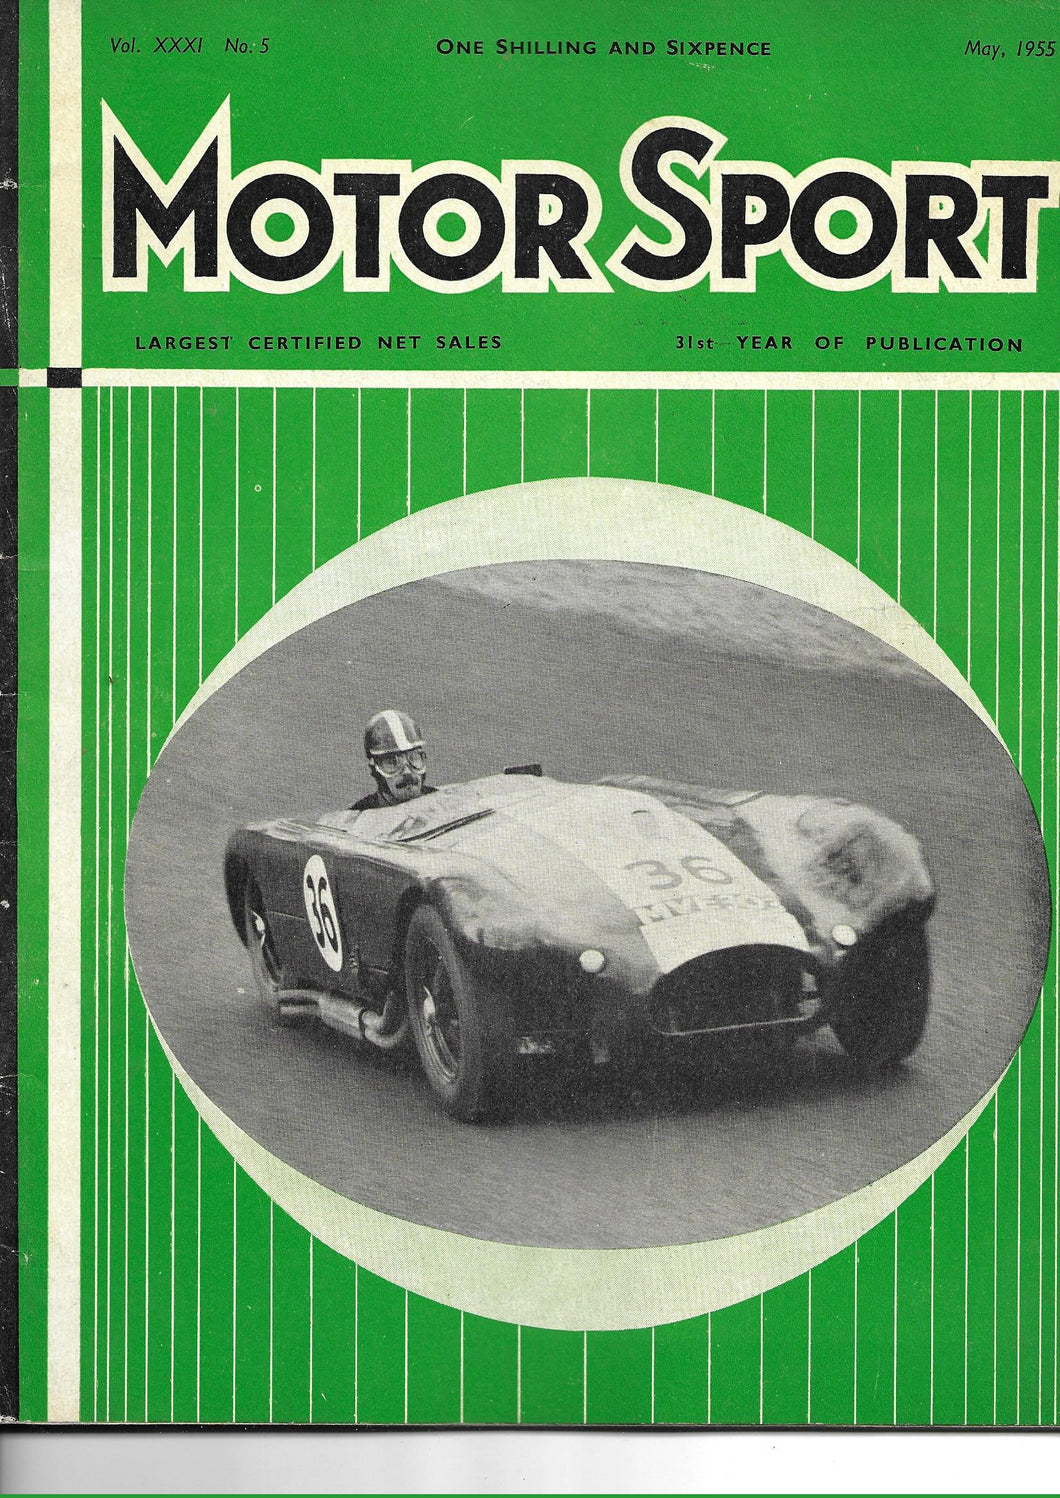 Motor Sport, Magazine, Vol XXXI No 5, May 1955,